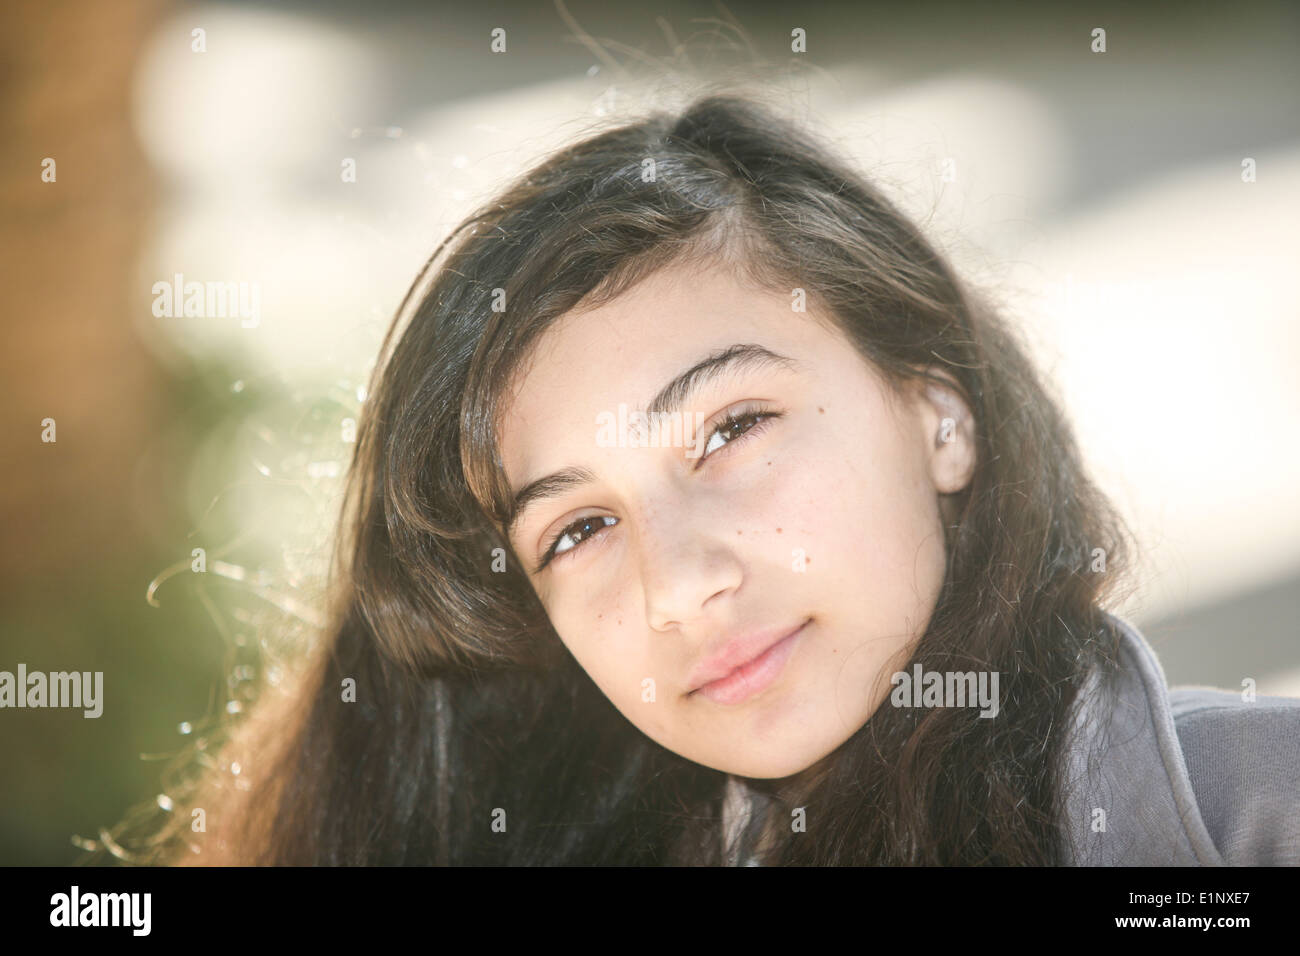 Porträt eines 12-jährigen Mädchens Bilder aus dem Monat Gan Hamoshava, Rishon Lezion, Israel Model release verfügbar Stockfoto